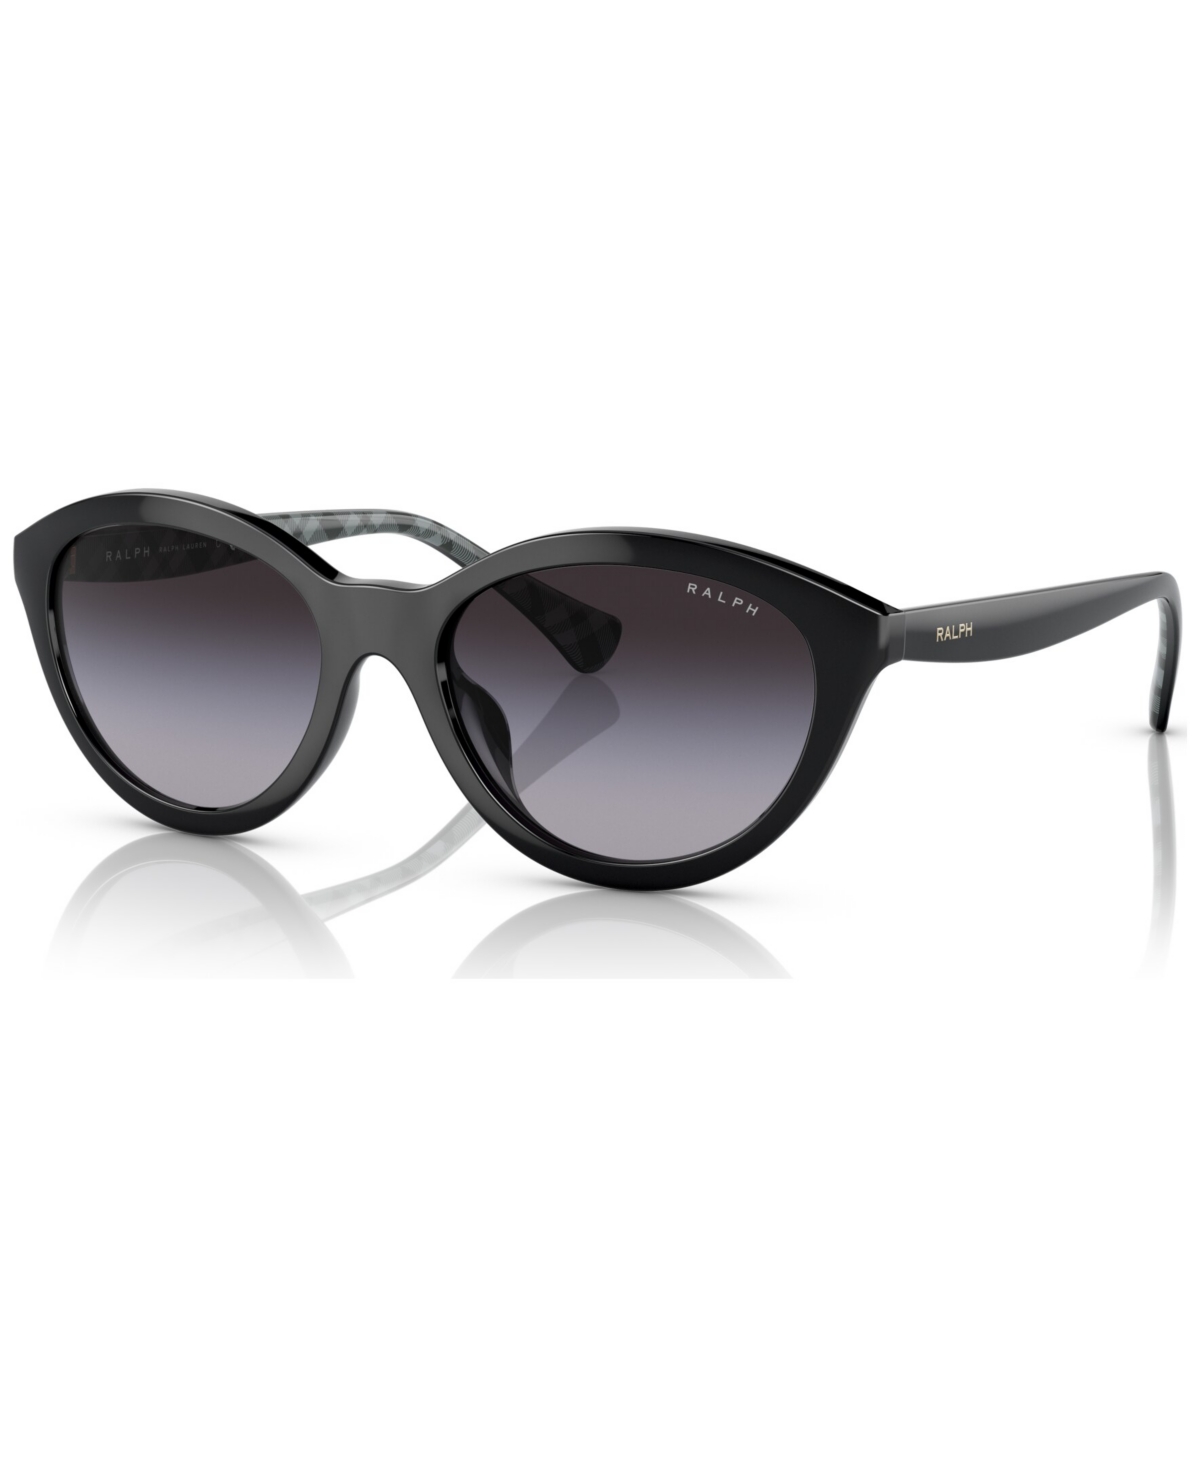 Women's Sunglasses, RA5295U54-y - Shiny Black